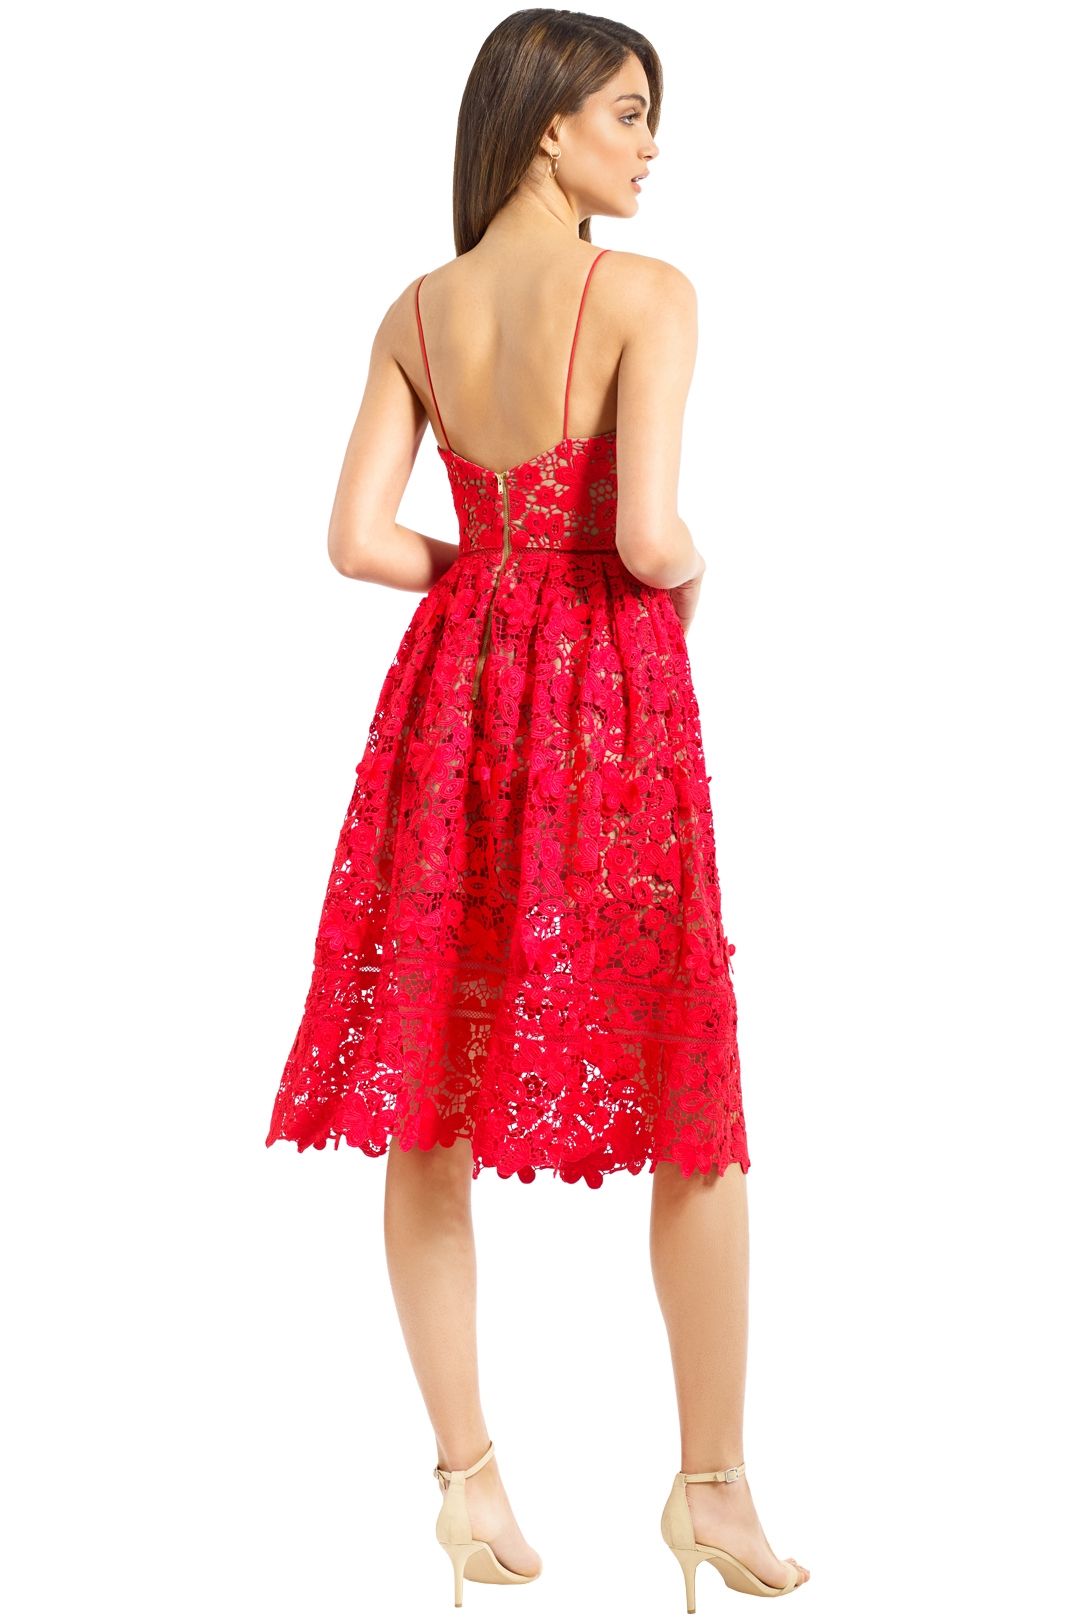 Self Portrait - Floral Azaelea Dress - Tomato Red - Back